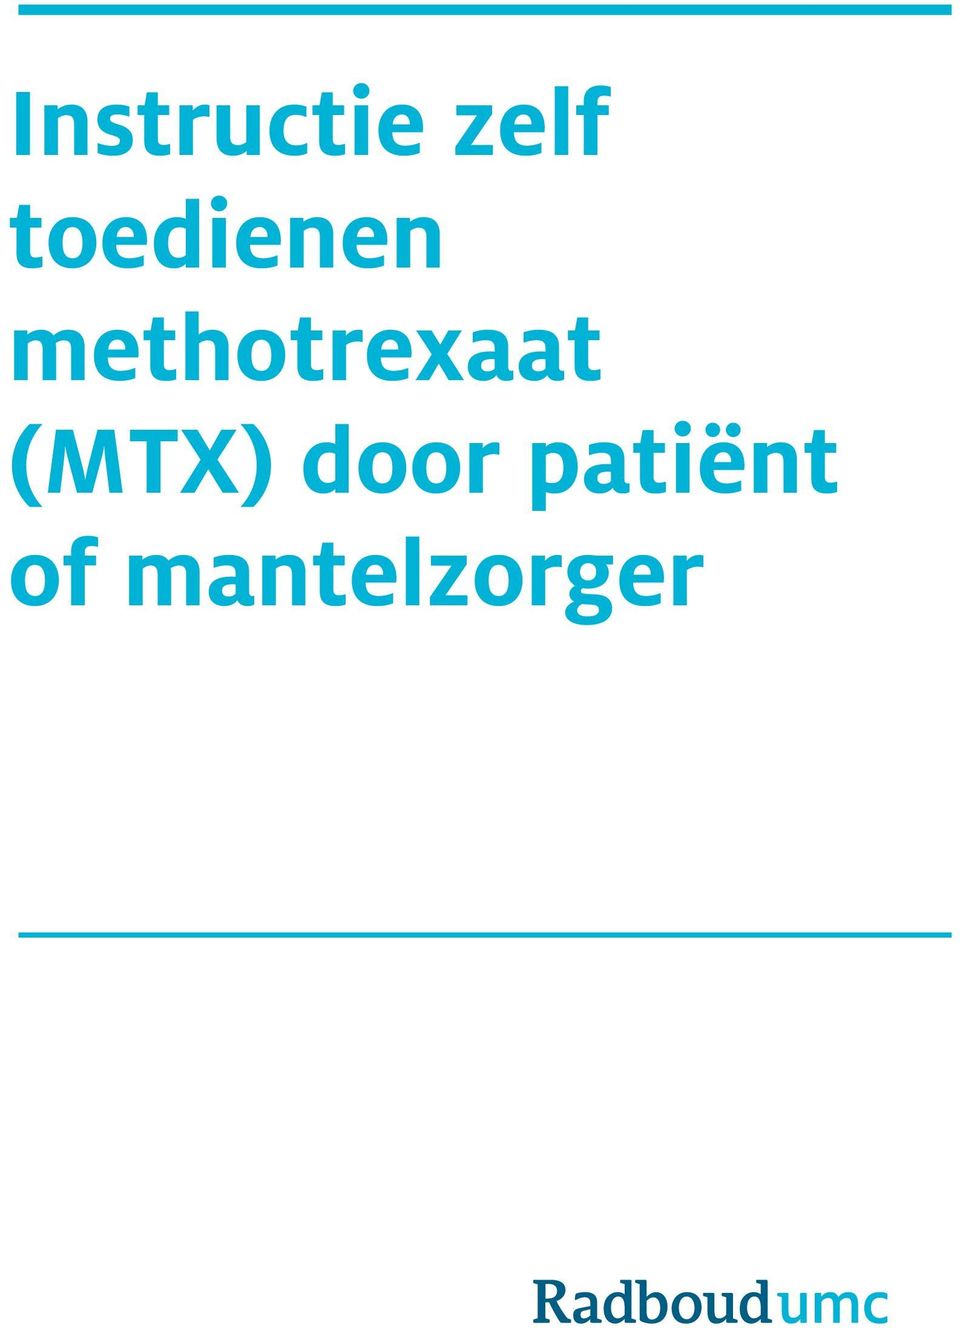 methotrexaat (MTX)